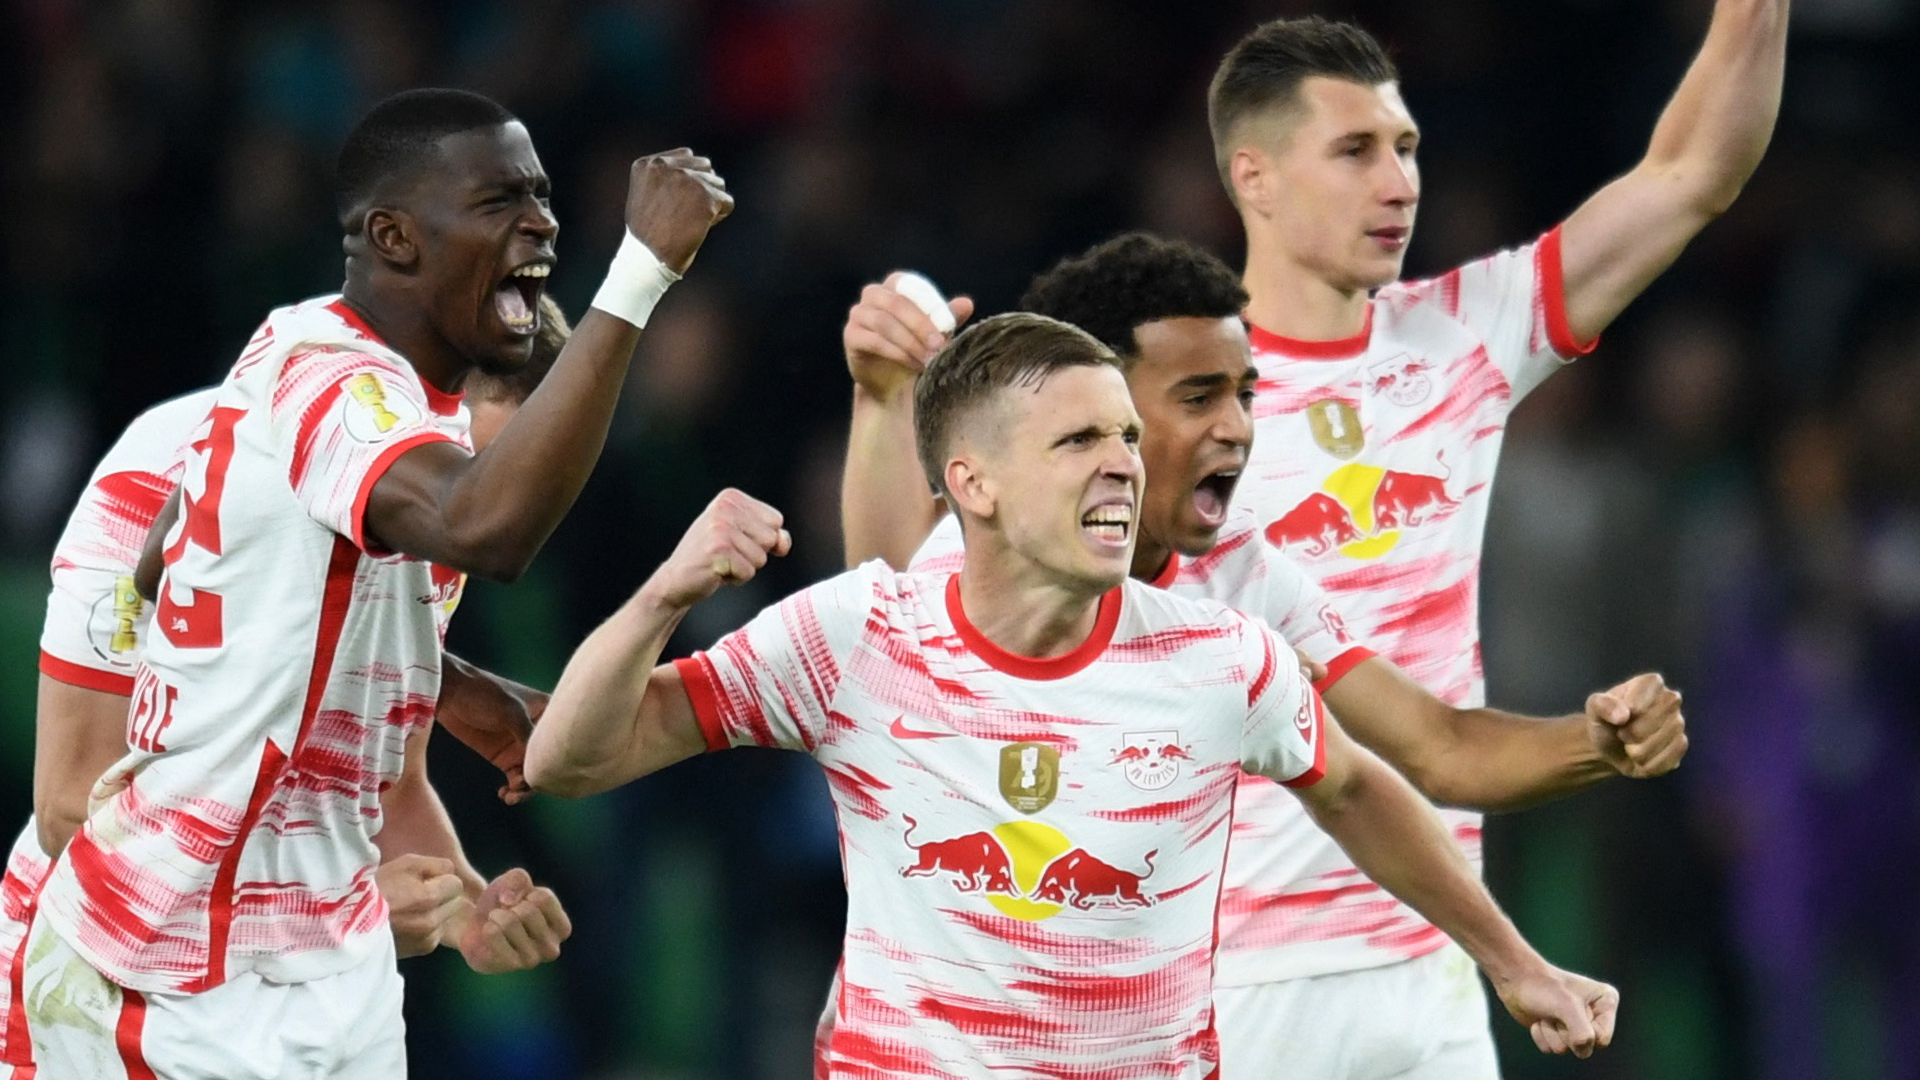 Victoria 4-2 sobre Freiburg: Leipzig gana la Copa DFB por primera vez